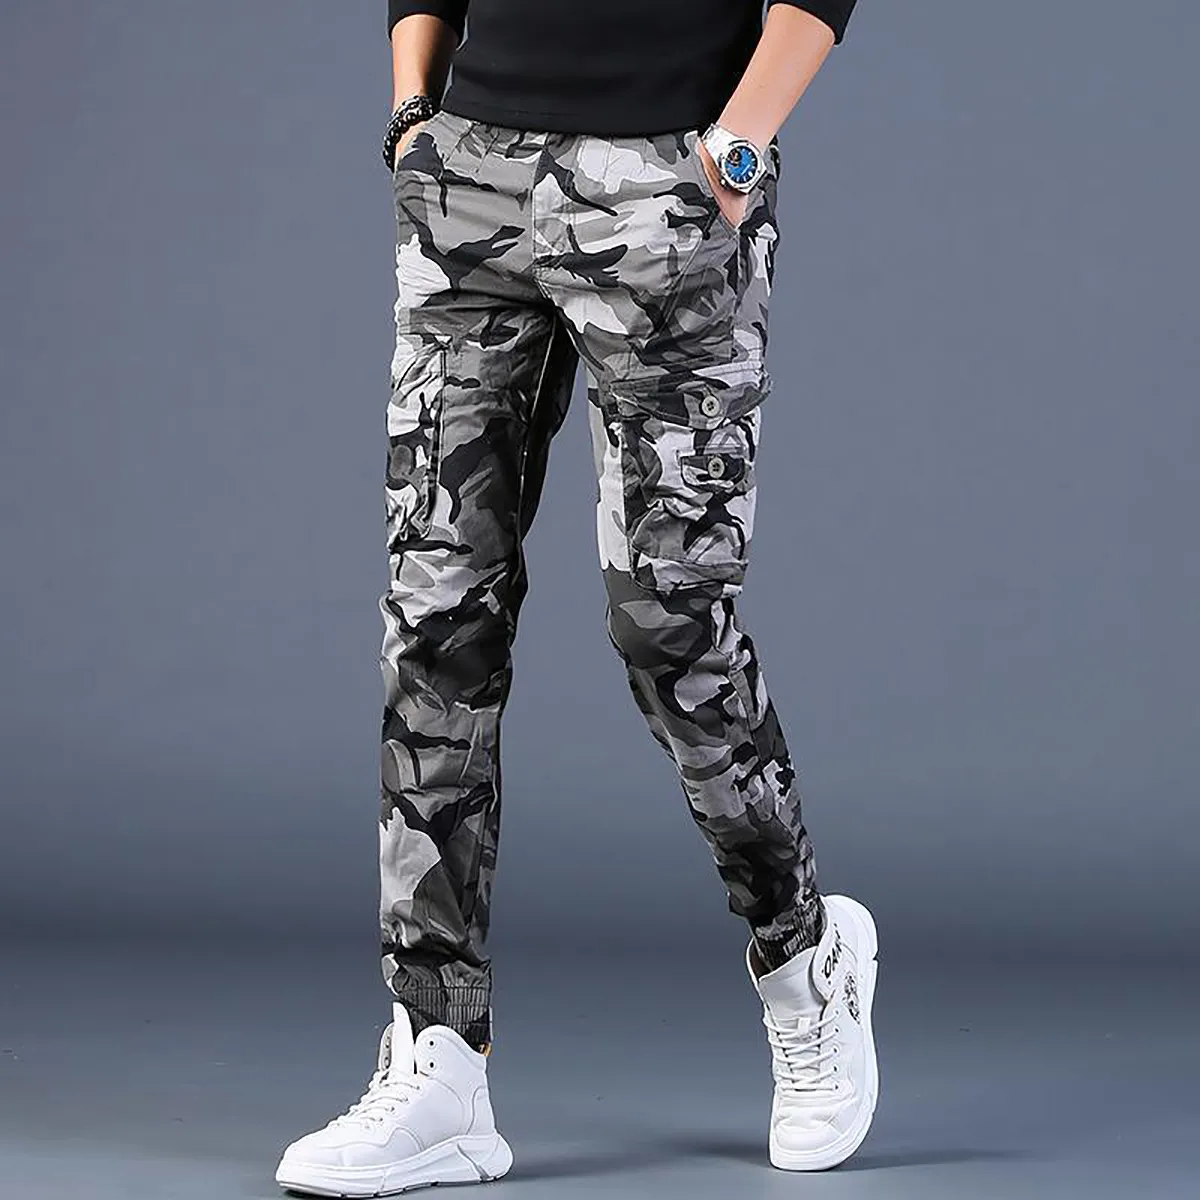 Heren jeans hoogwaardige mannen slanke fit denim broek camouflage multi pocket jogging stijlvolle sportstraat trendy lading jeans 220927